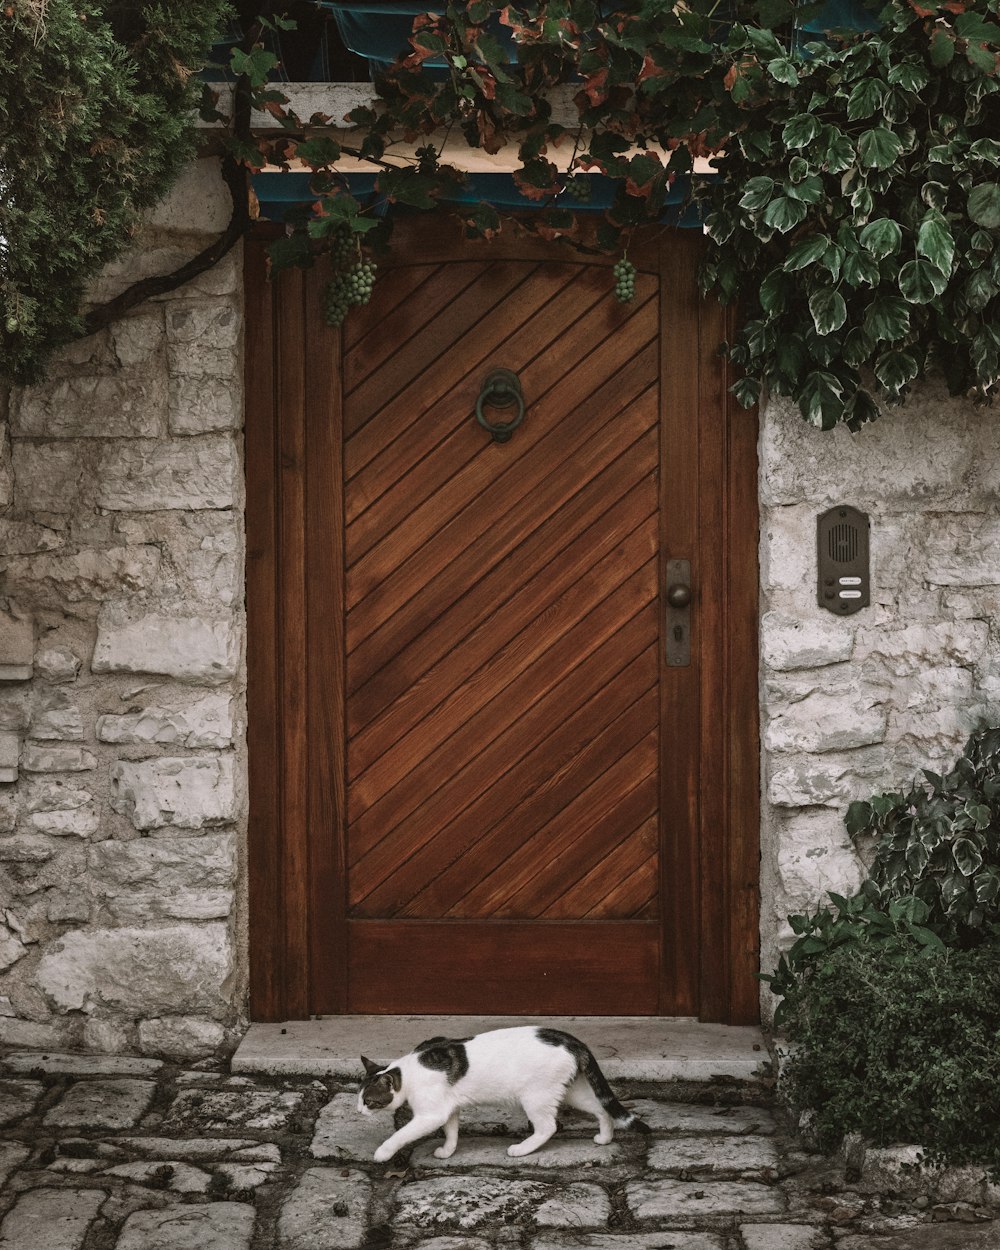 white and black cat walking next to brown wooden door